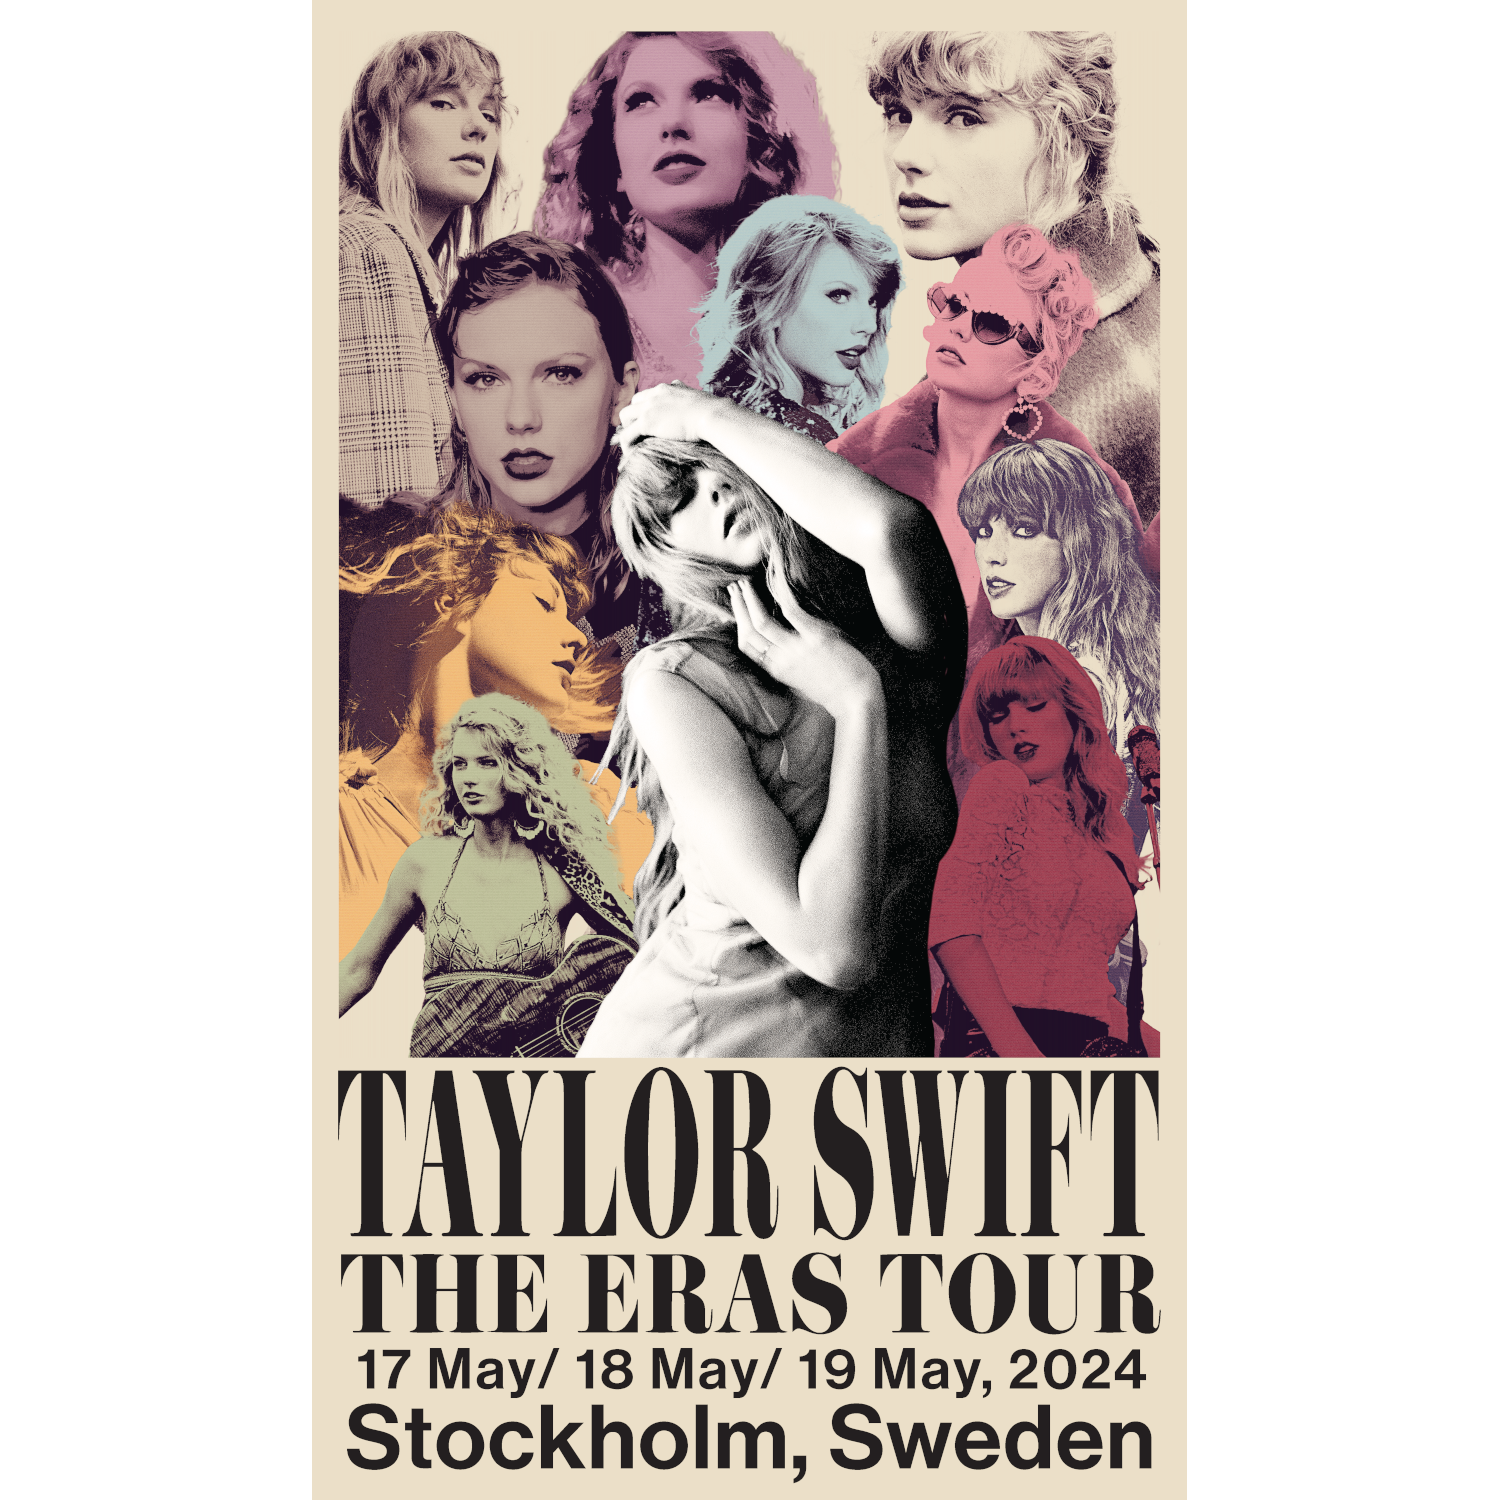 https://images.bravado.de/prod/product-assets/product-asset-data/taylor-swift/taylor-swift/products/507926/web/444627/image-thumb__444627__3000x3000_original/Taylor-Swift-Taylor-Swift-The-Eras-Tour-Stockholm-Sweden-Poster-Poster-mehrfarbig-507926-444627.259acb37.png